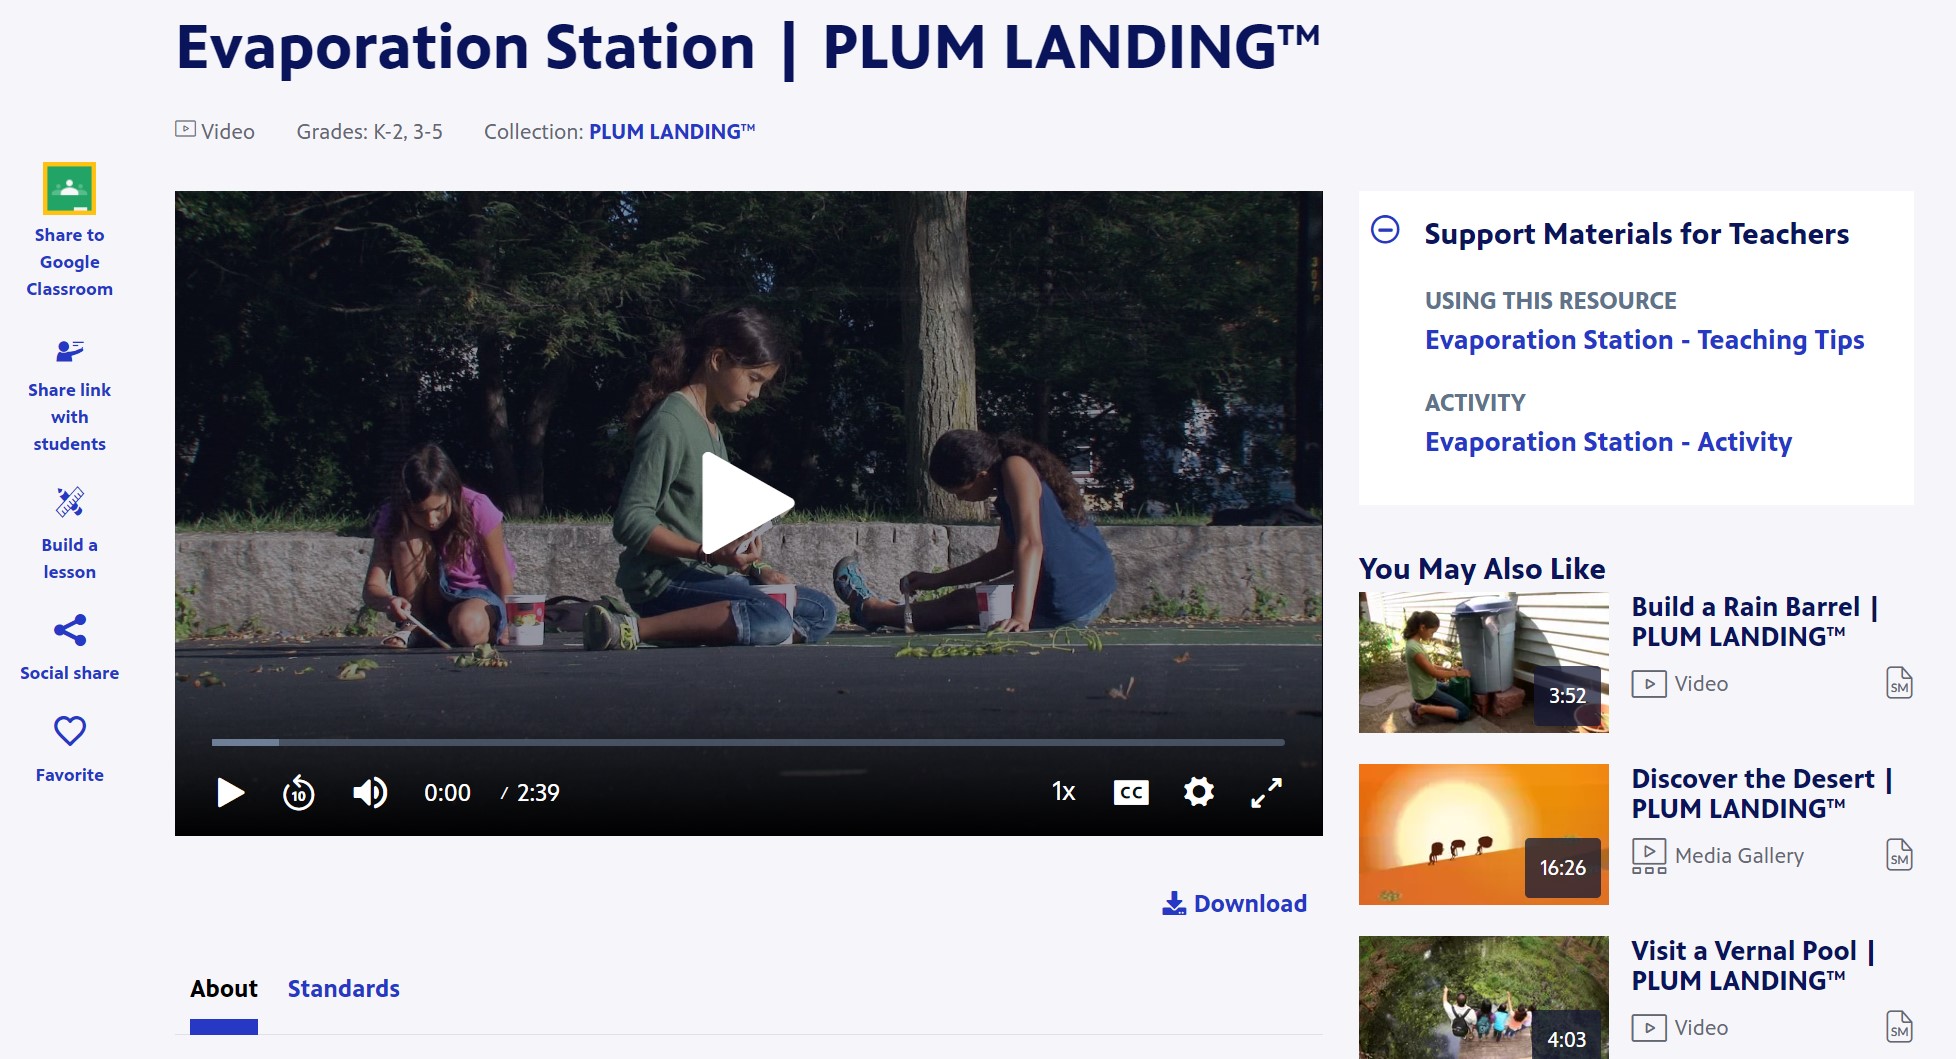 Evaporation Station | PLUM LANDING™